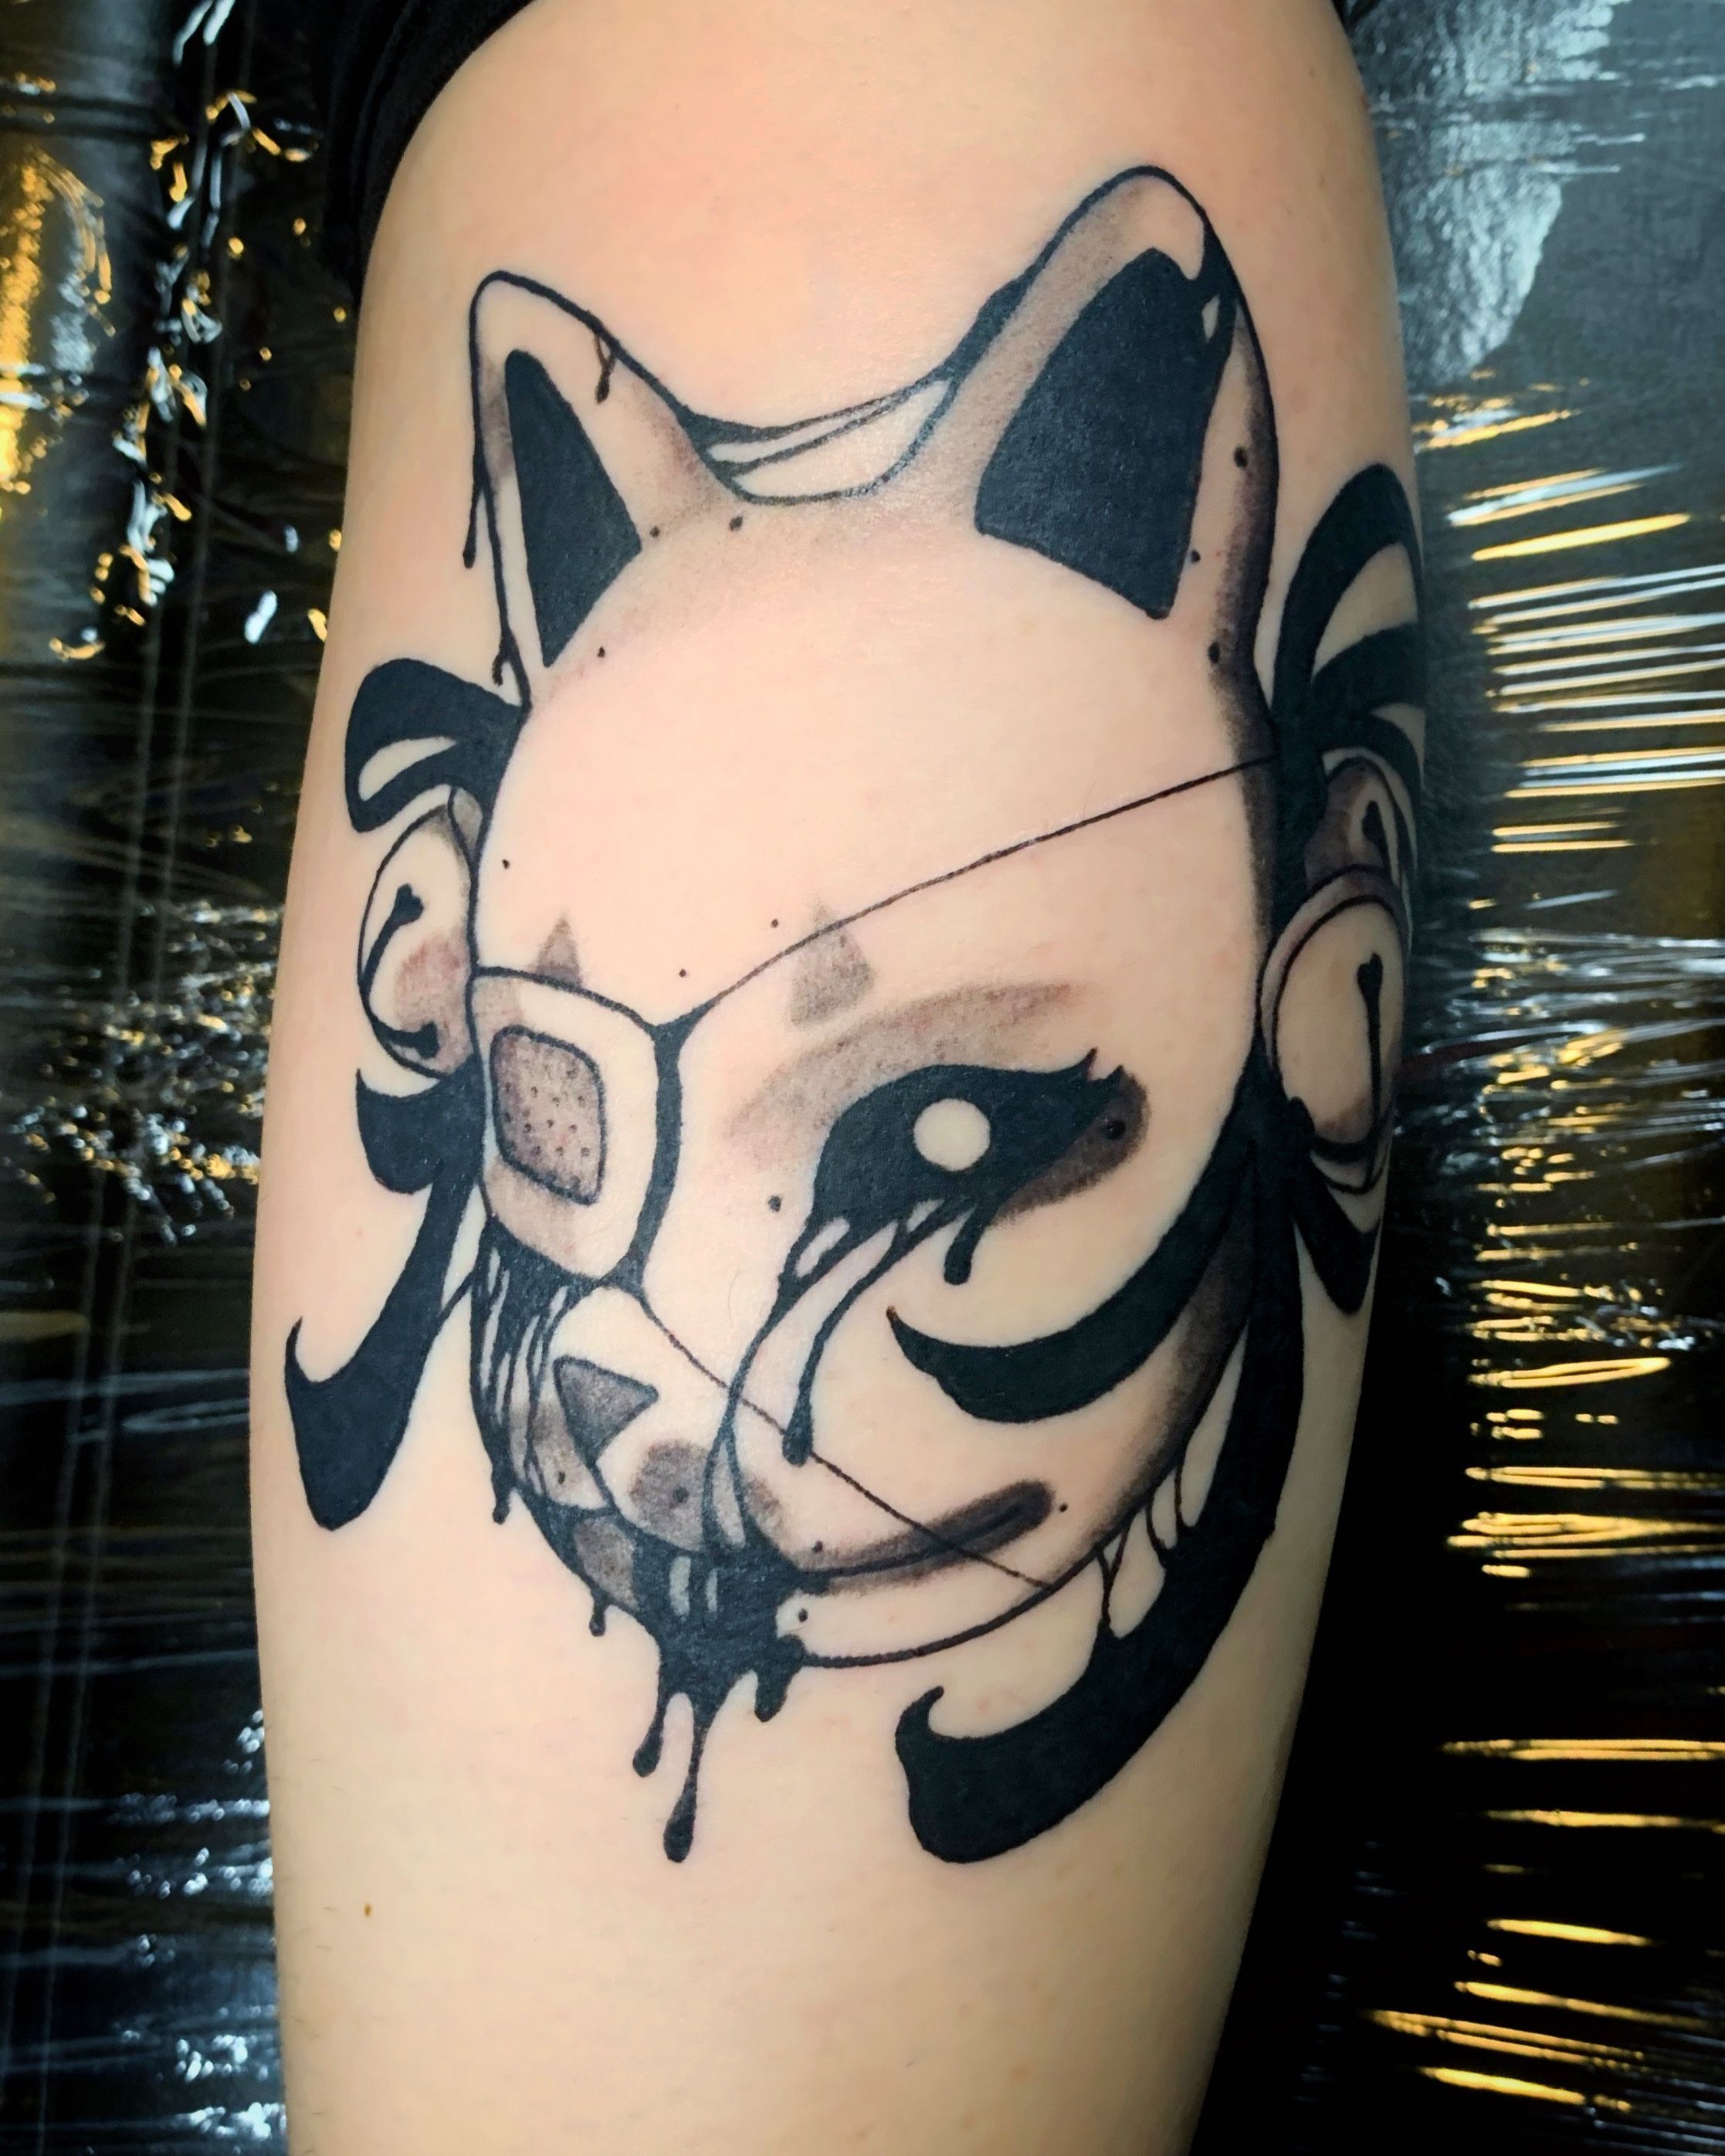 𝐋 𝐔 𝐍 𝐀 on Twitter Tattooed this Japanese Kitsune mask thigh piece   httpstcolx2DD9KVIR  Twitter